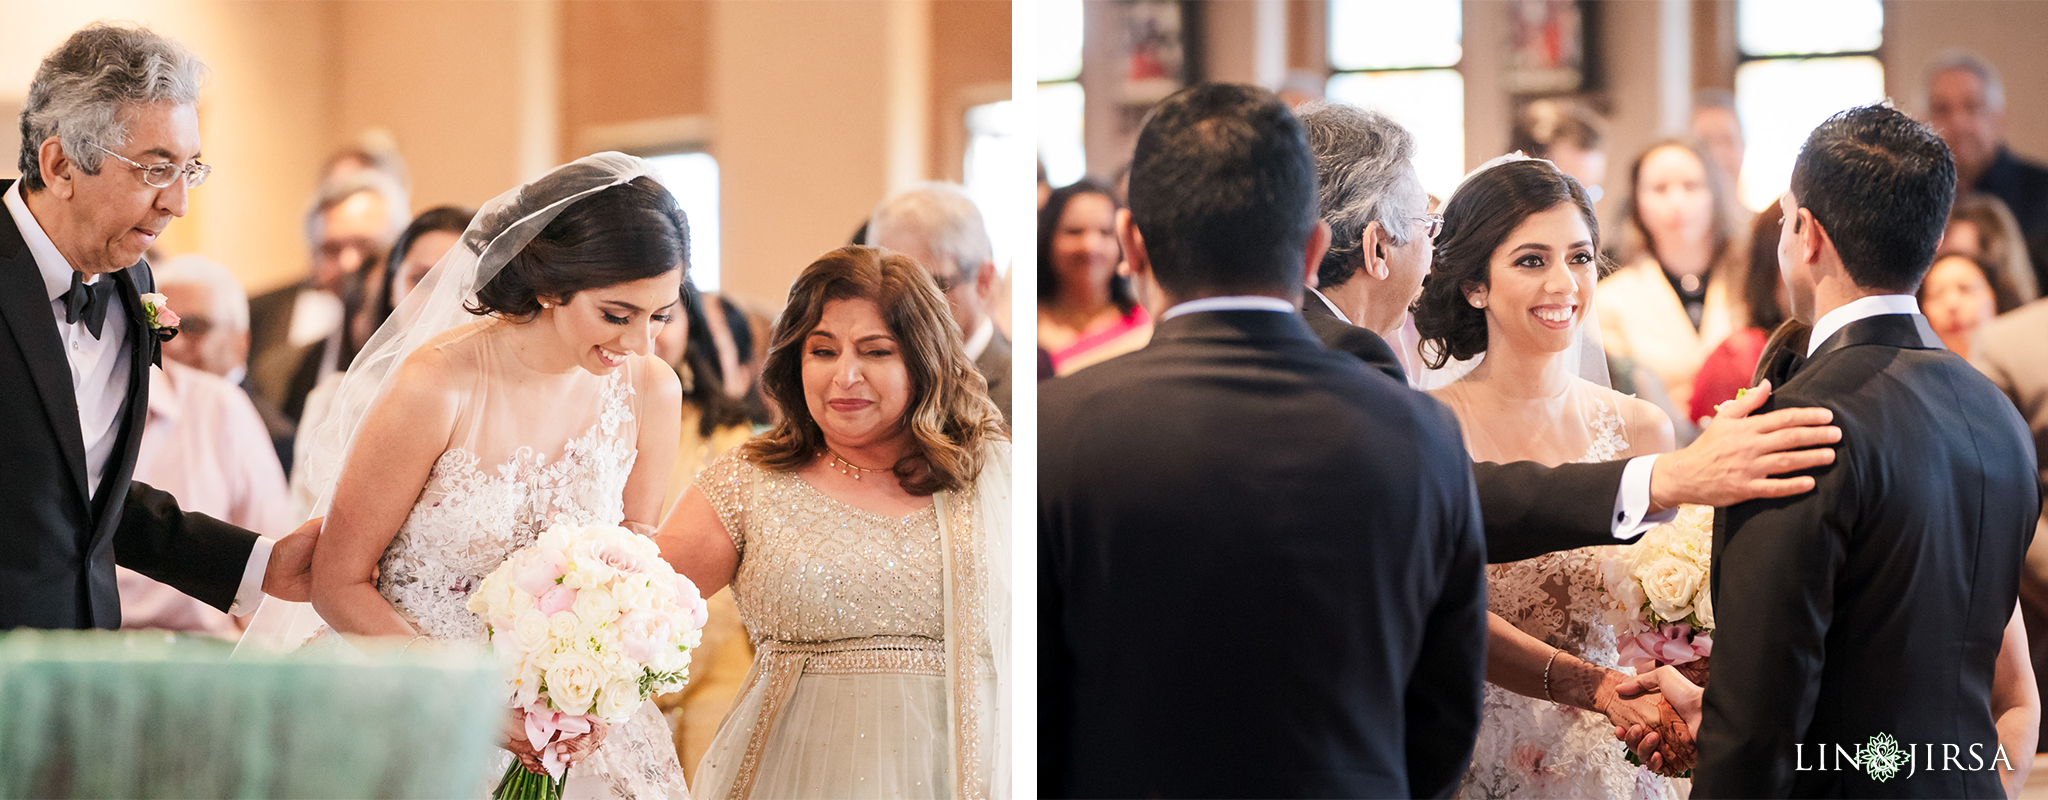 11 Newport Beach Marriott Indian Wedding Photography 1